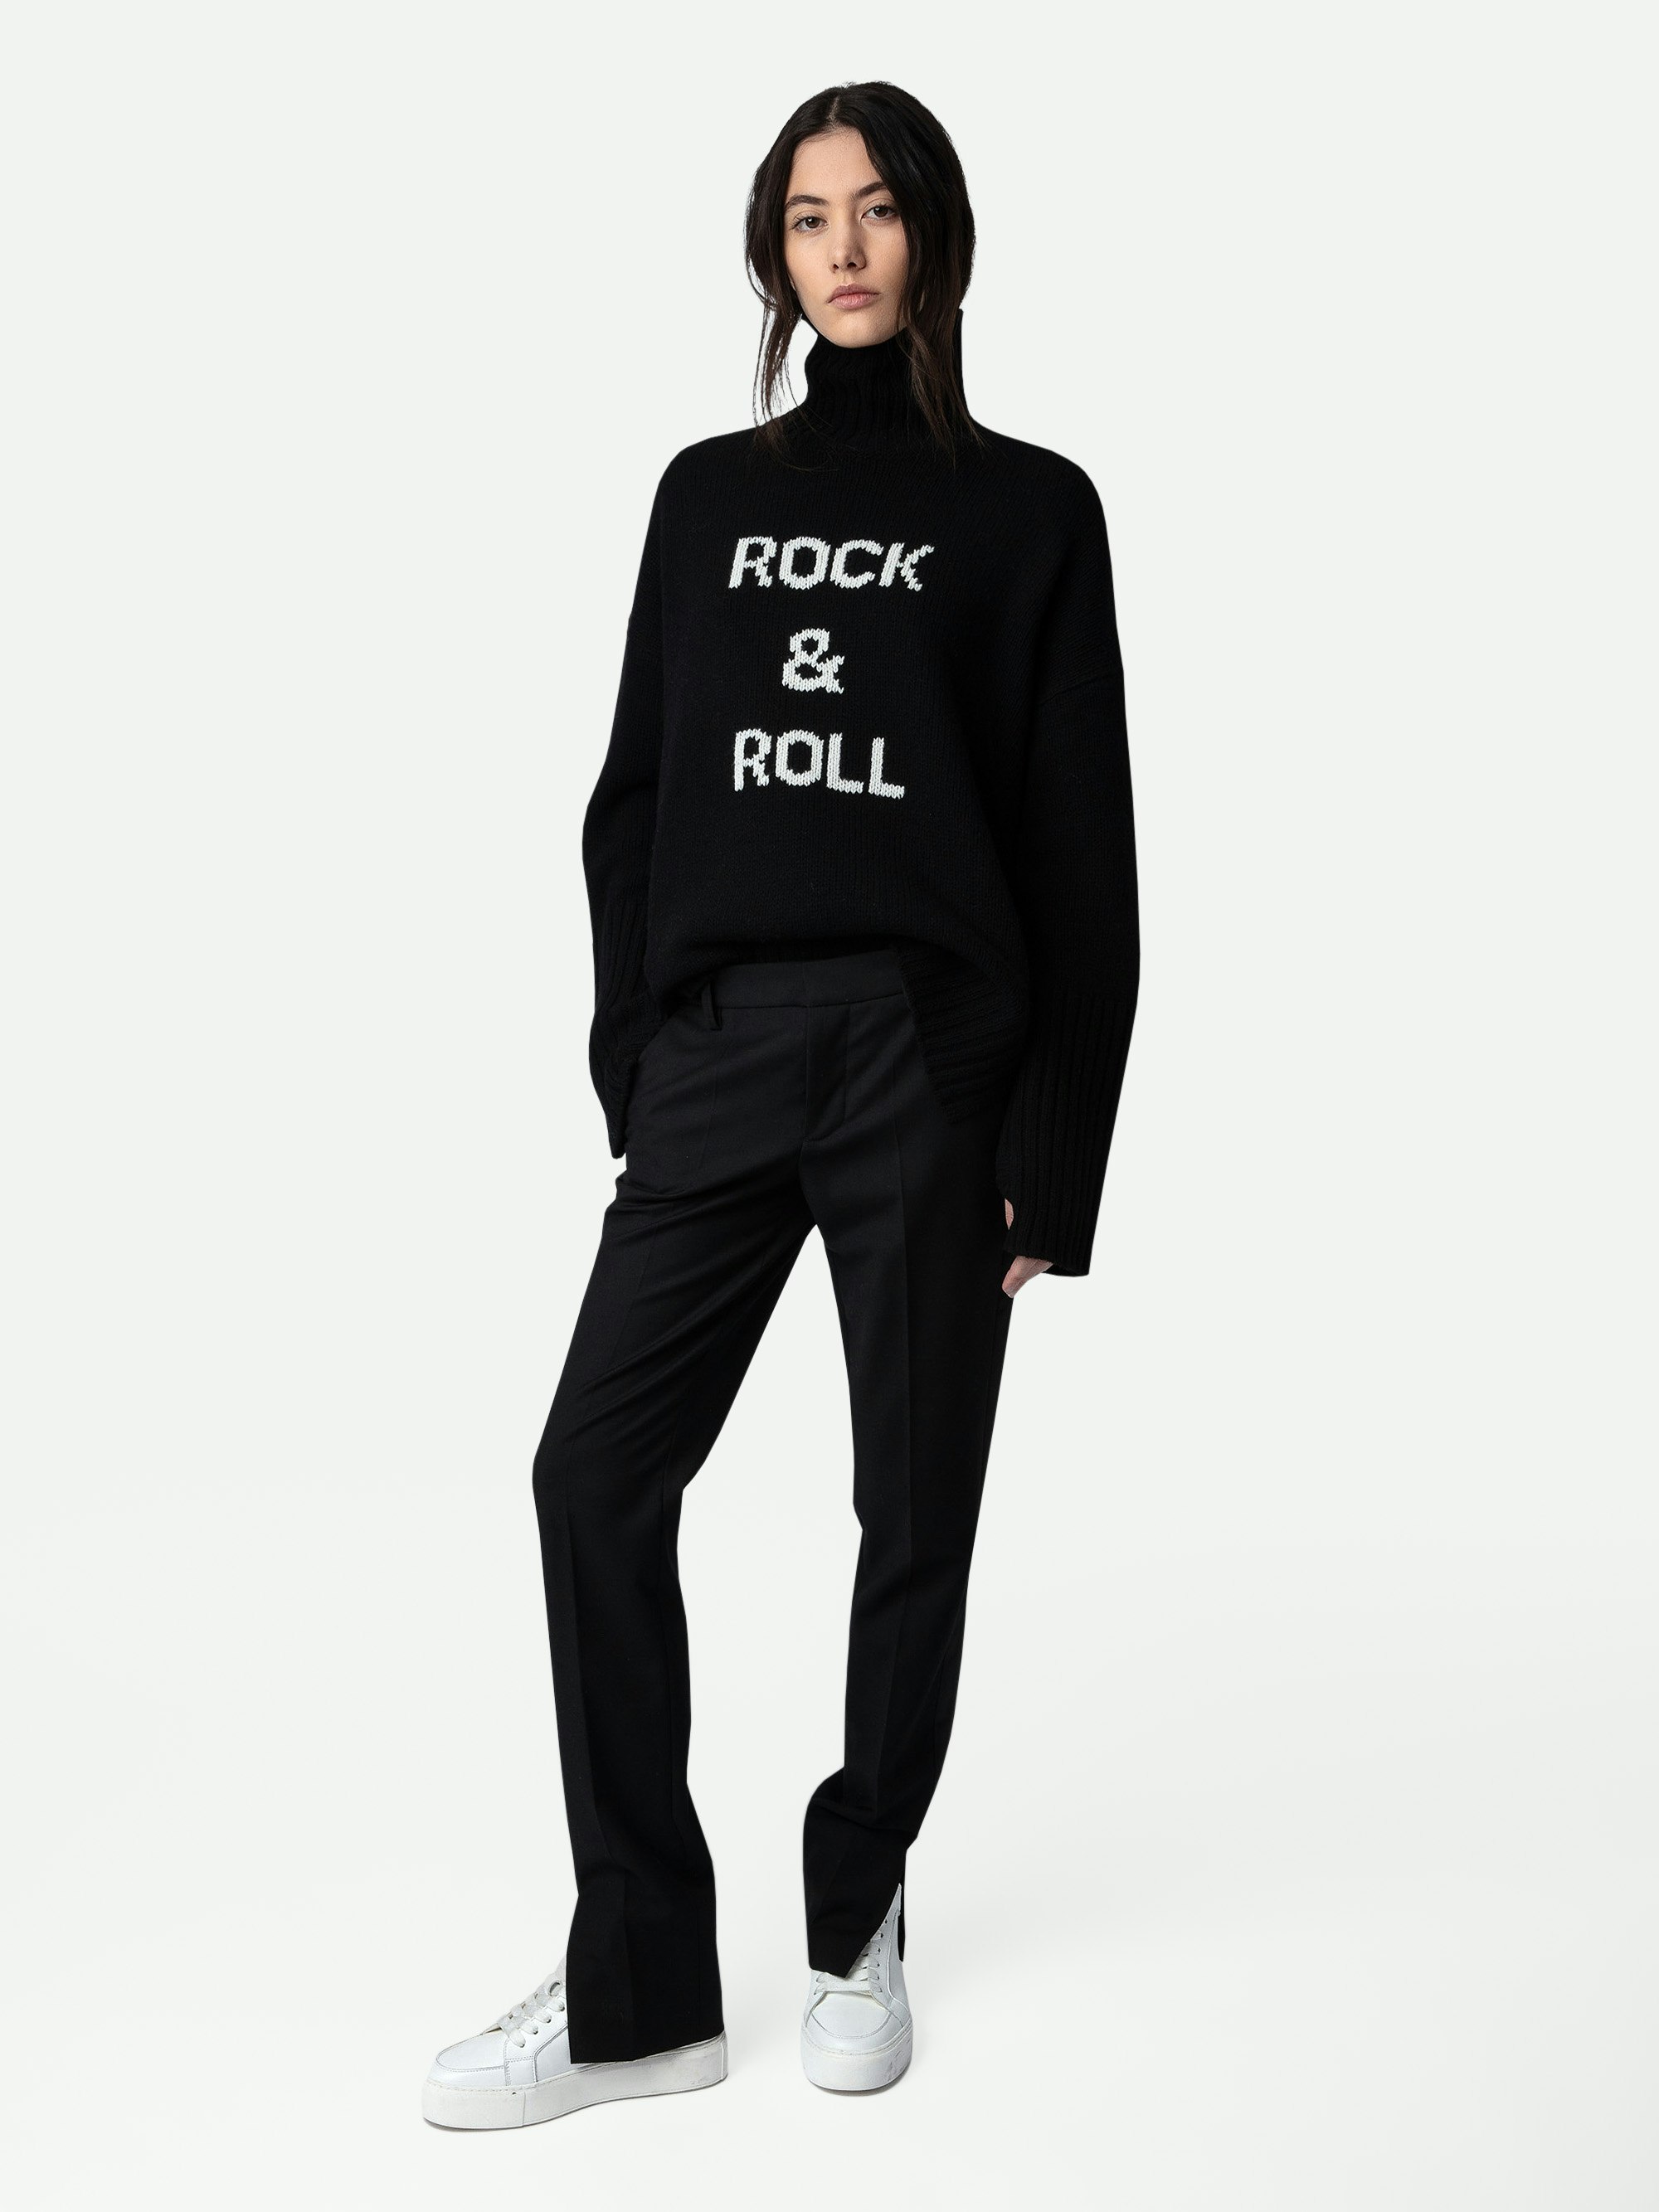 Alma Rock & Roll Sweater - Women’s black turtleneck sweater with slogan